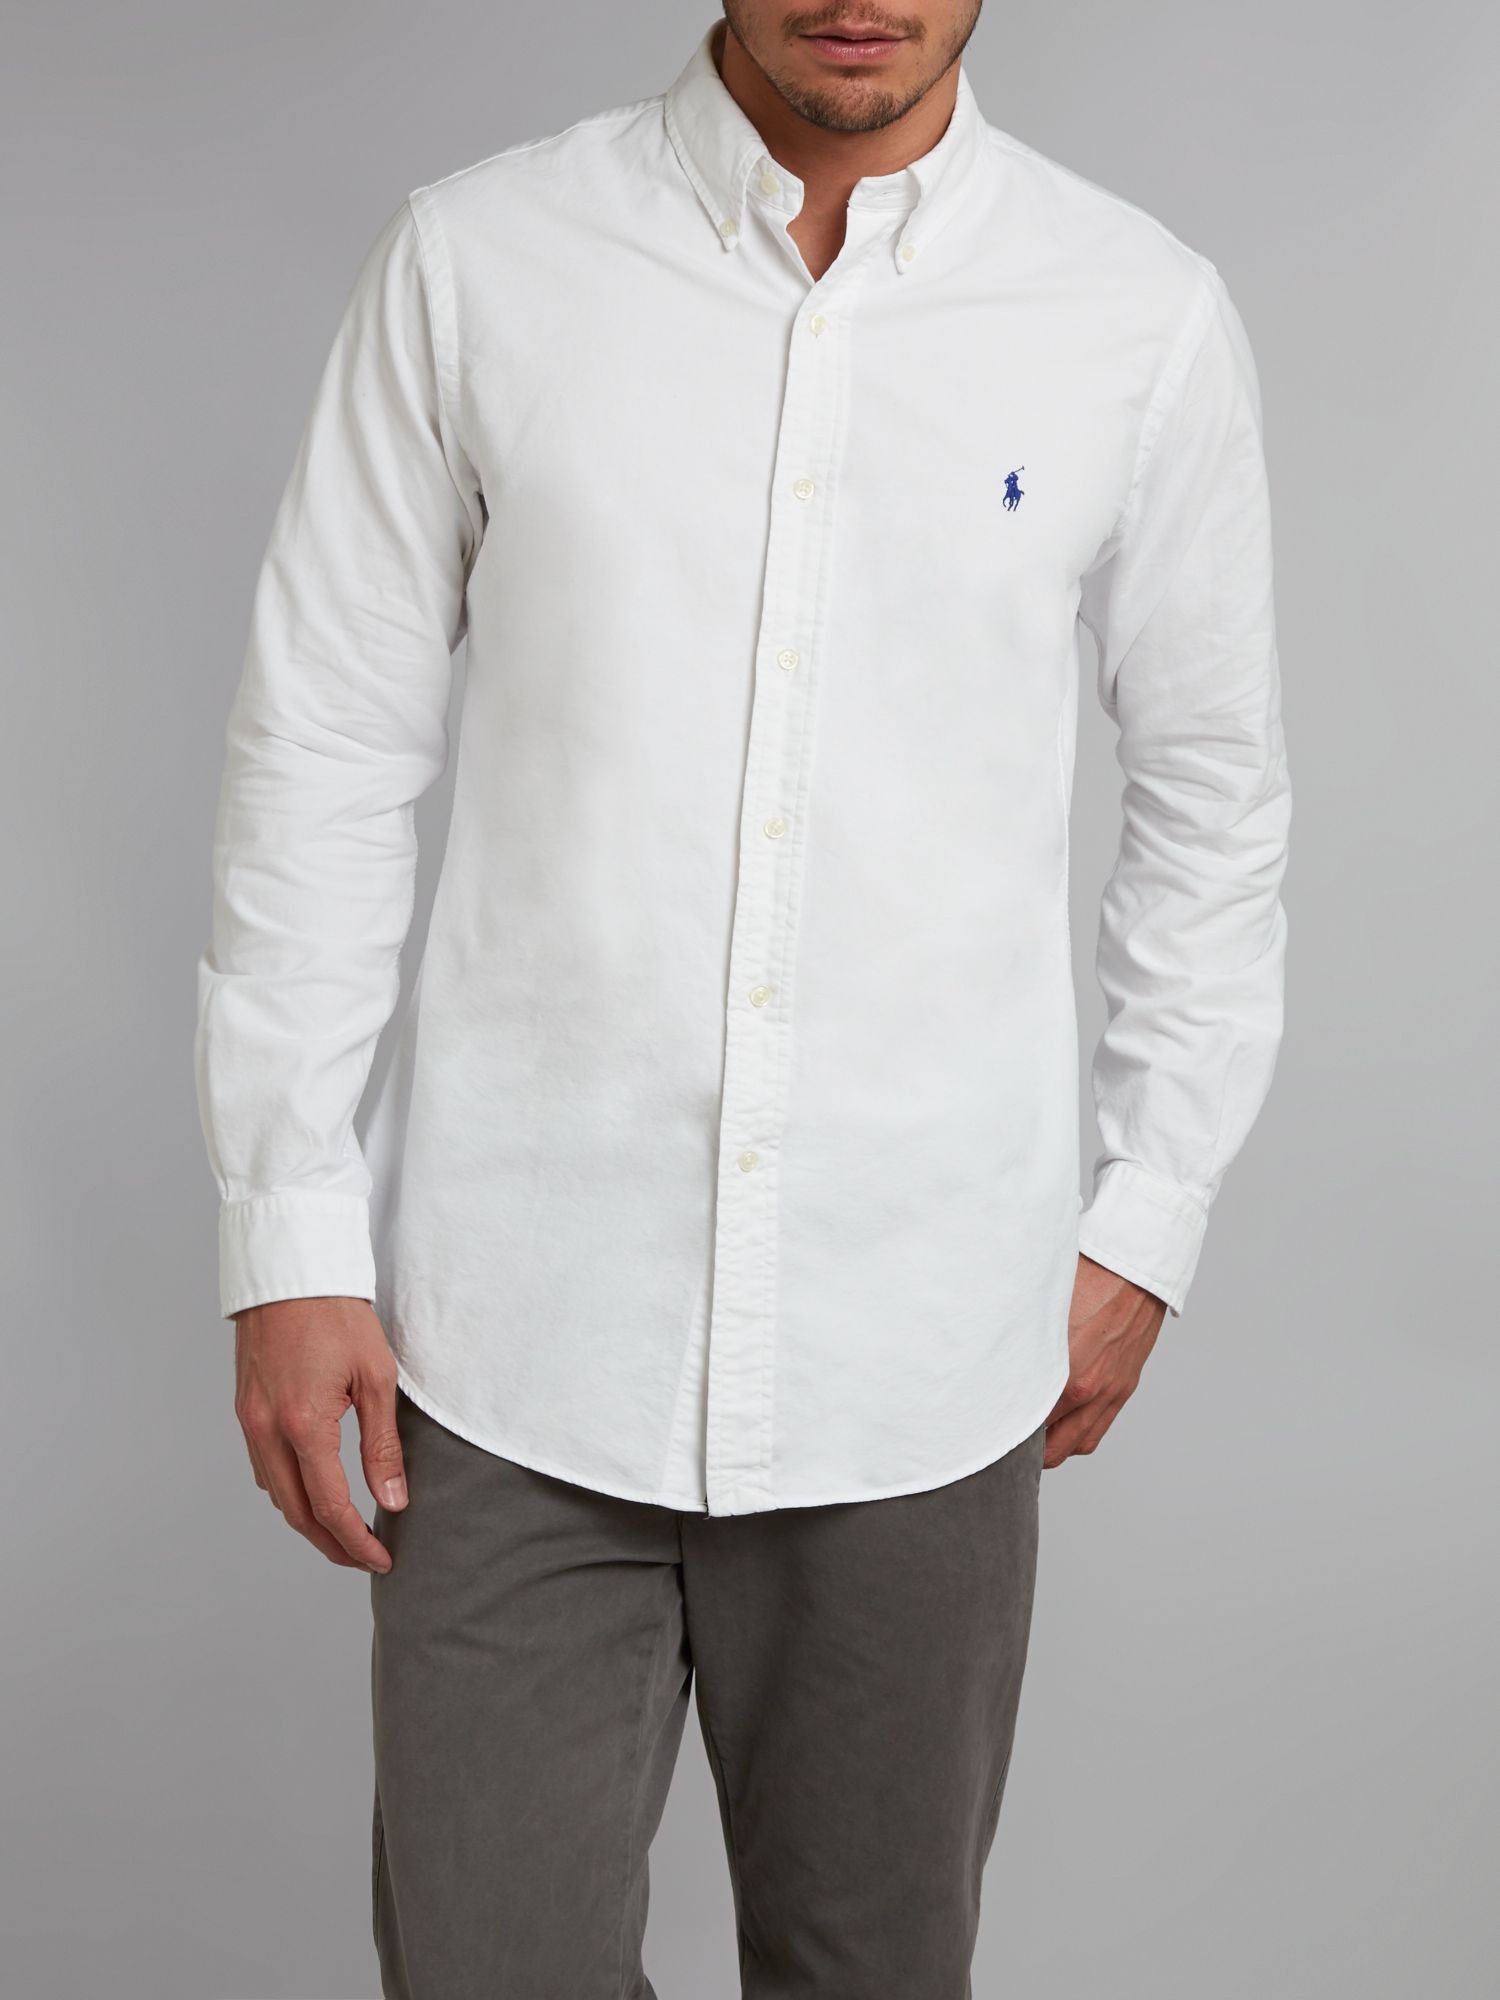 Polo Ralph Lauren Classic Oxford Shirt in White for Men - Lyst